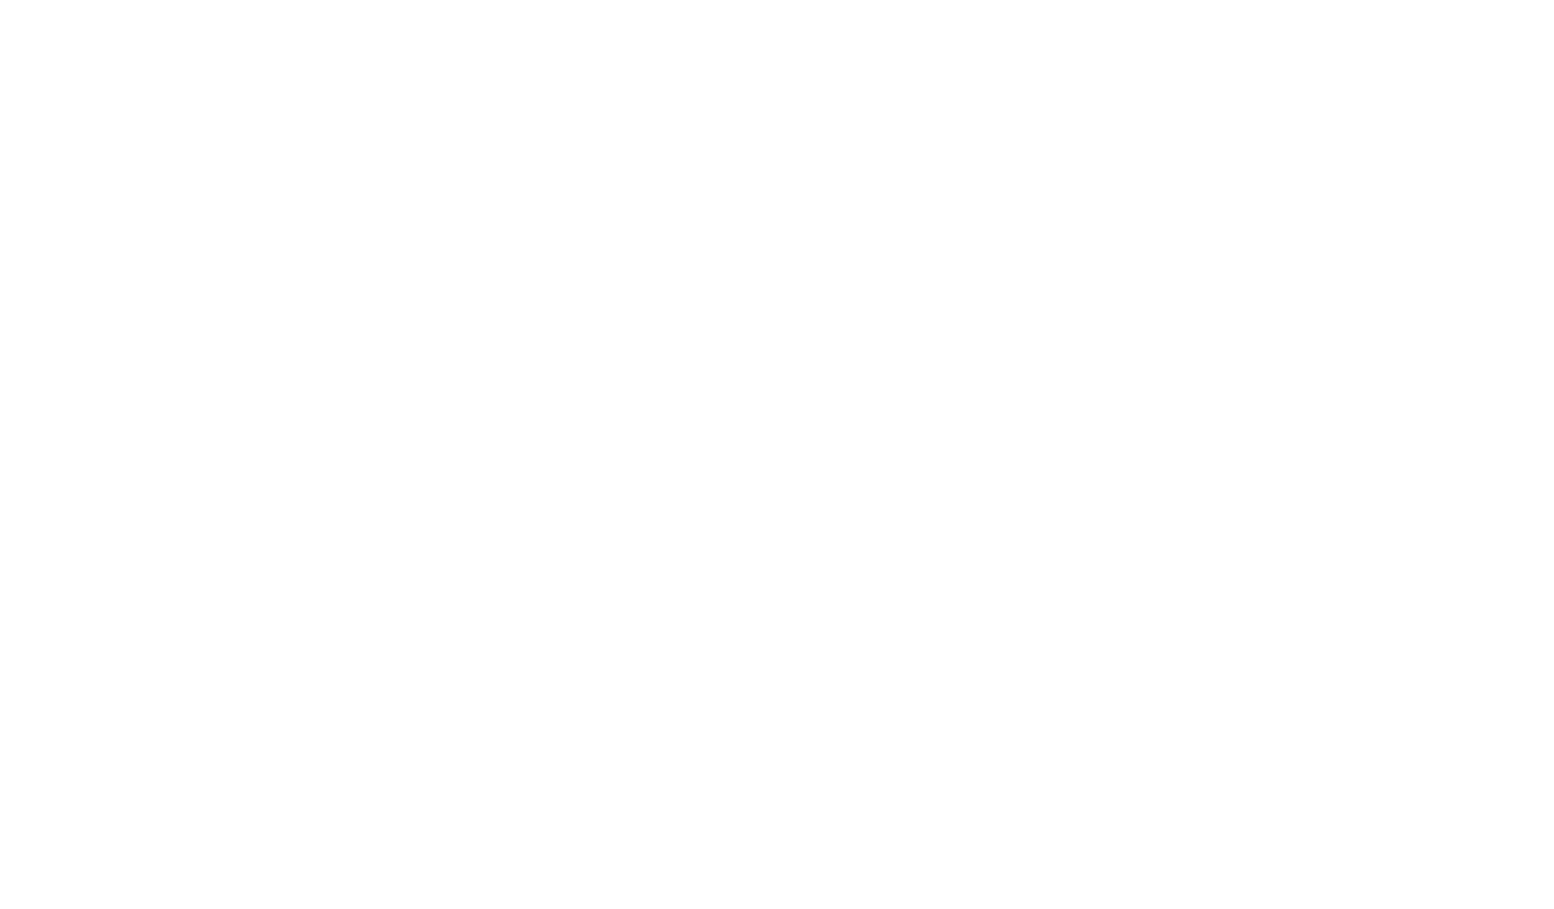 Wirtualna Polska (WP Holding) logo pour fonds sombres (PNG transparent)